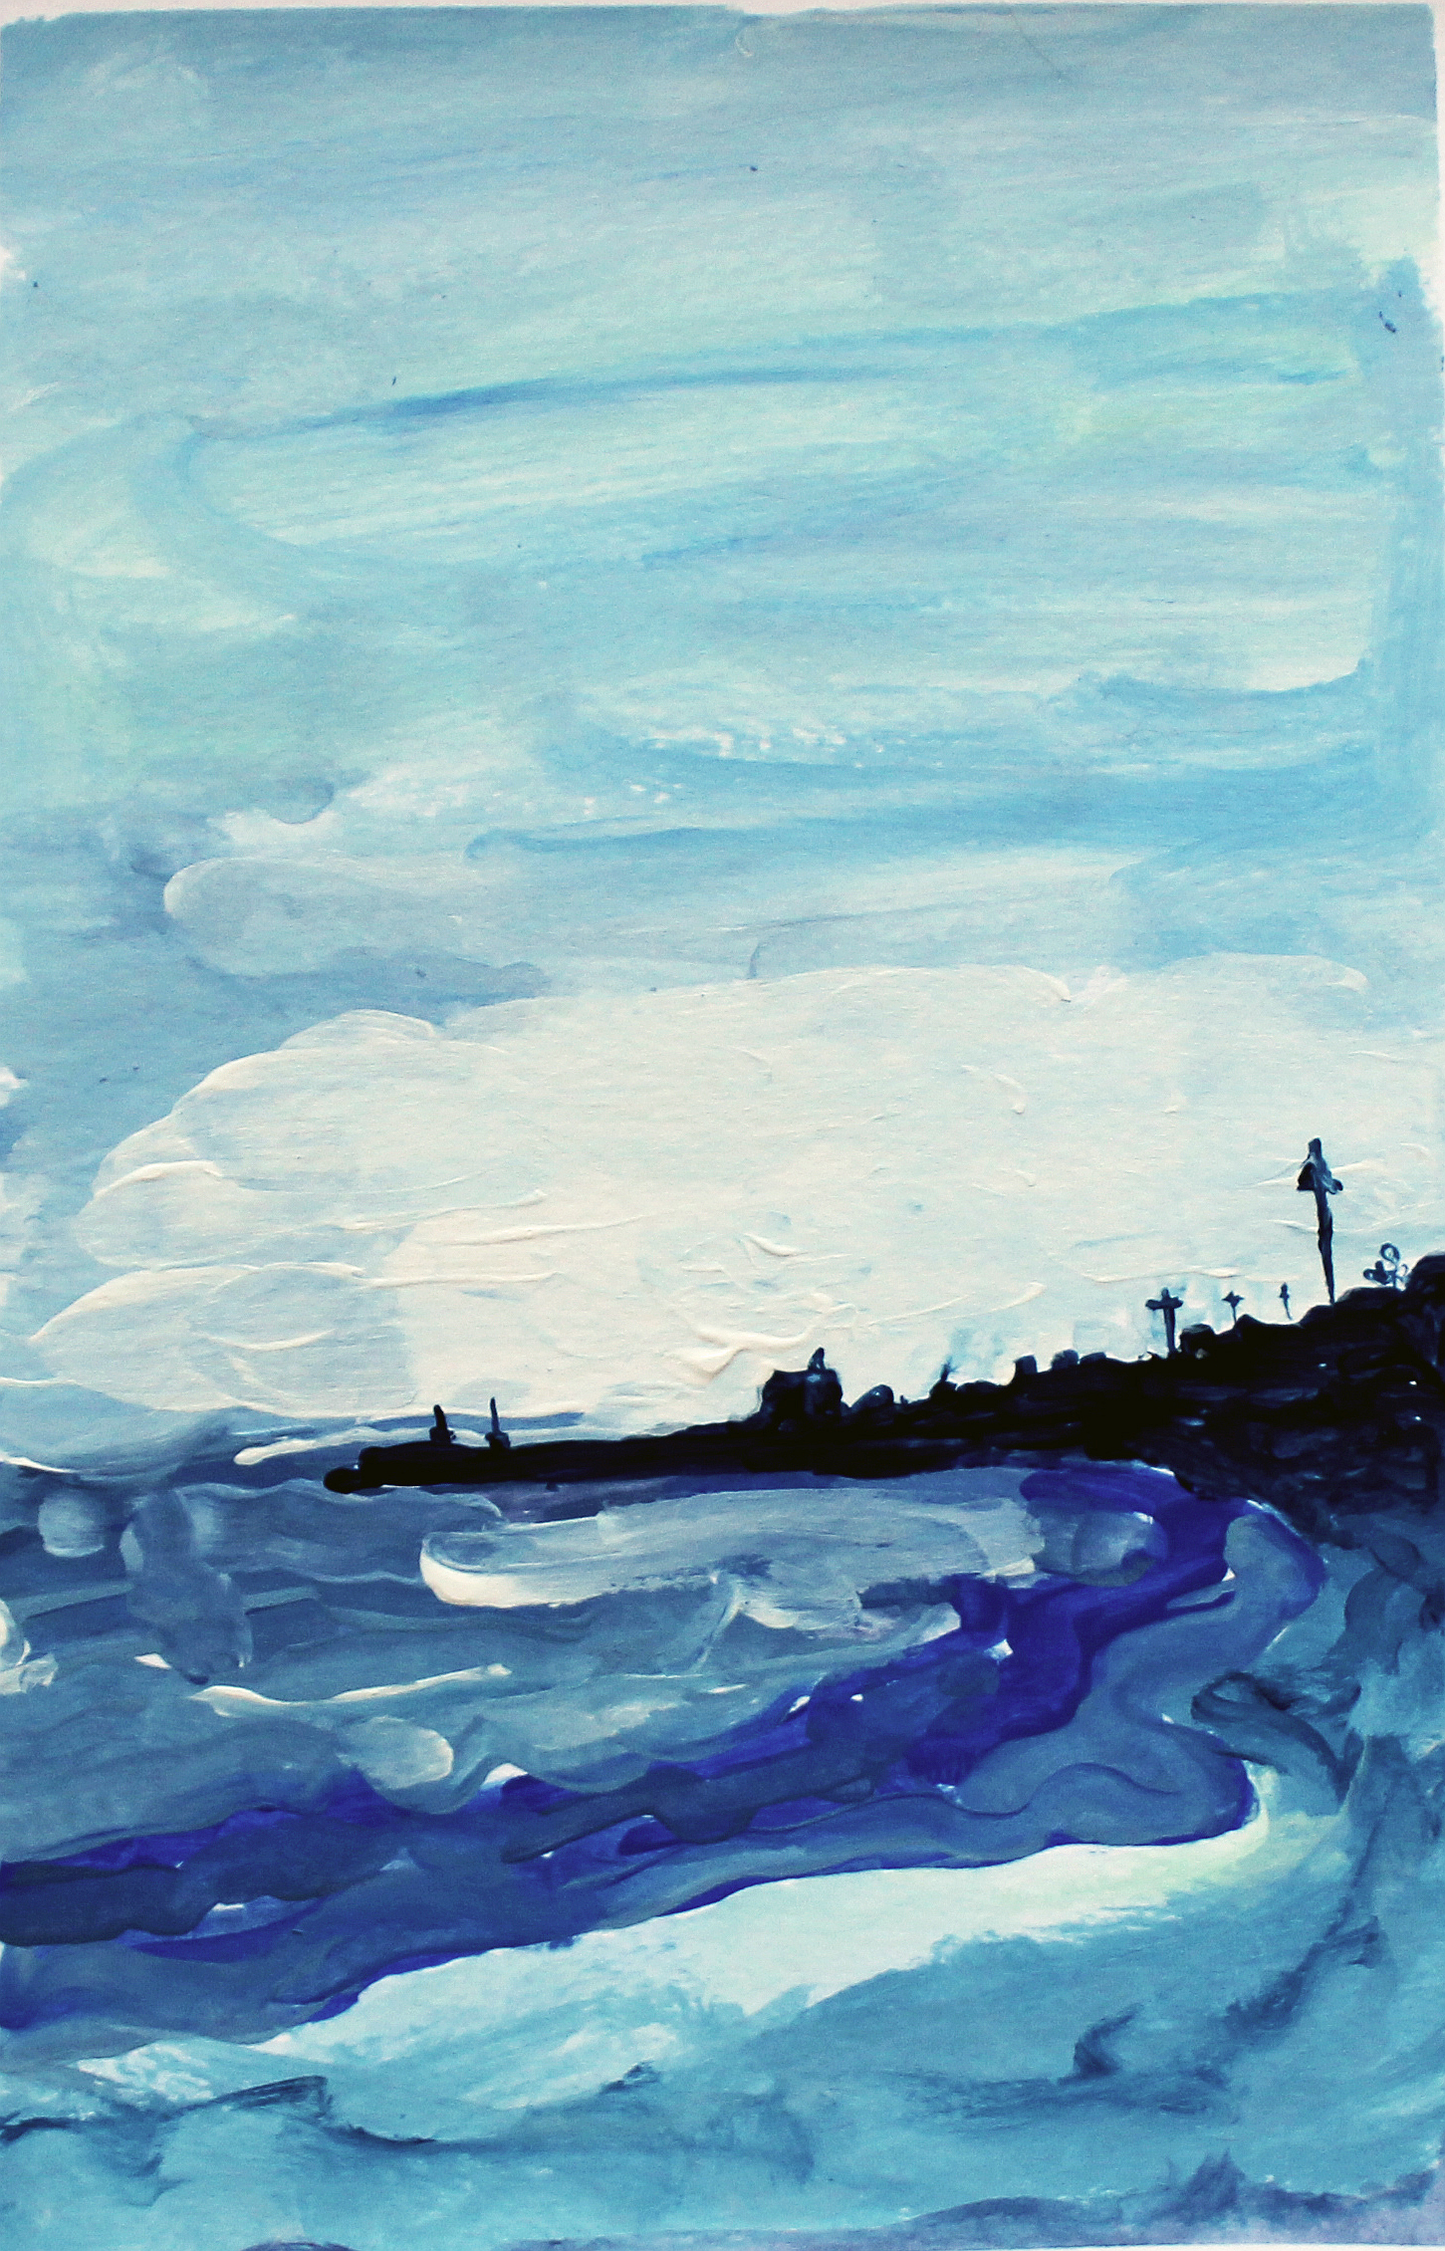 Sitges by the Beach - No.07 - Fine Art Print